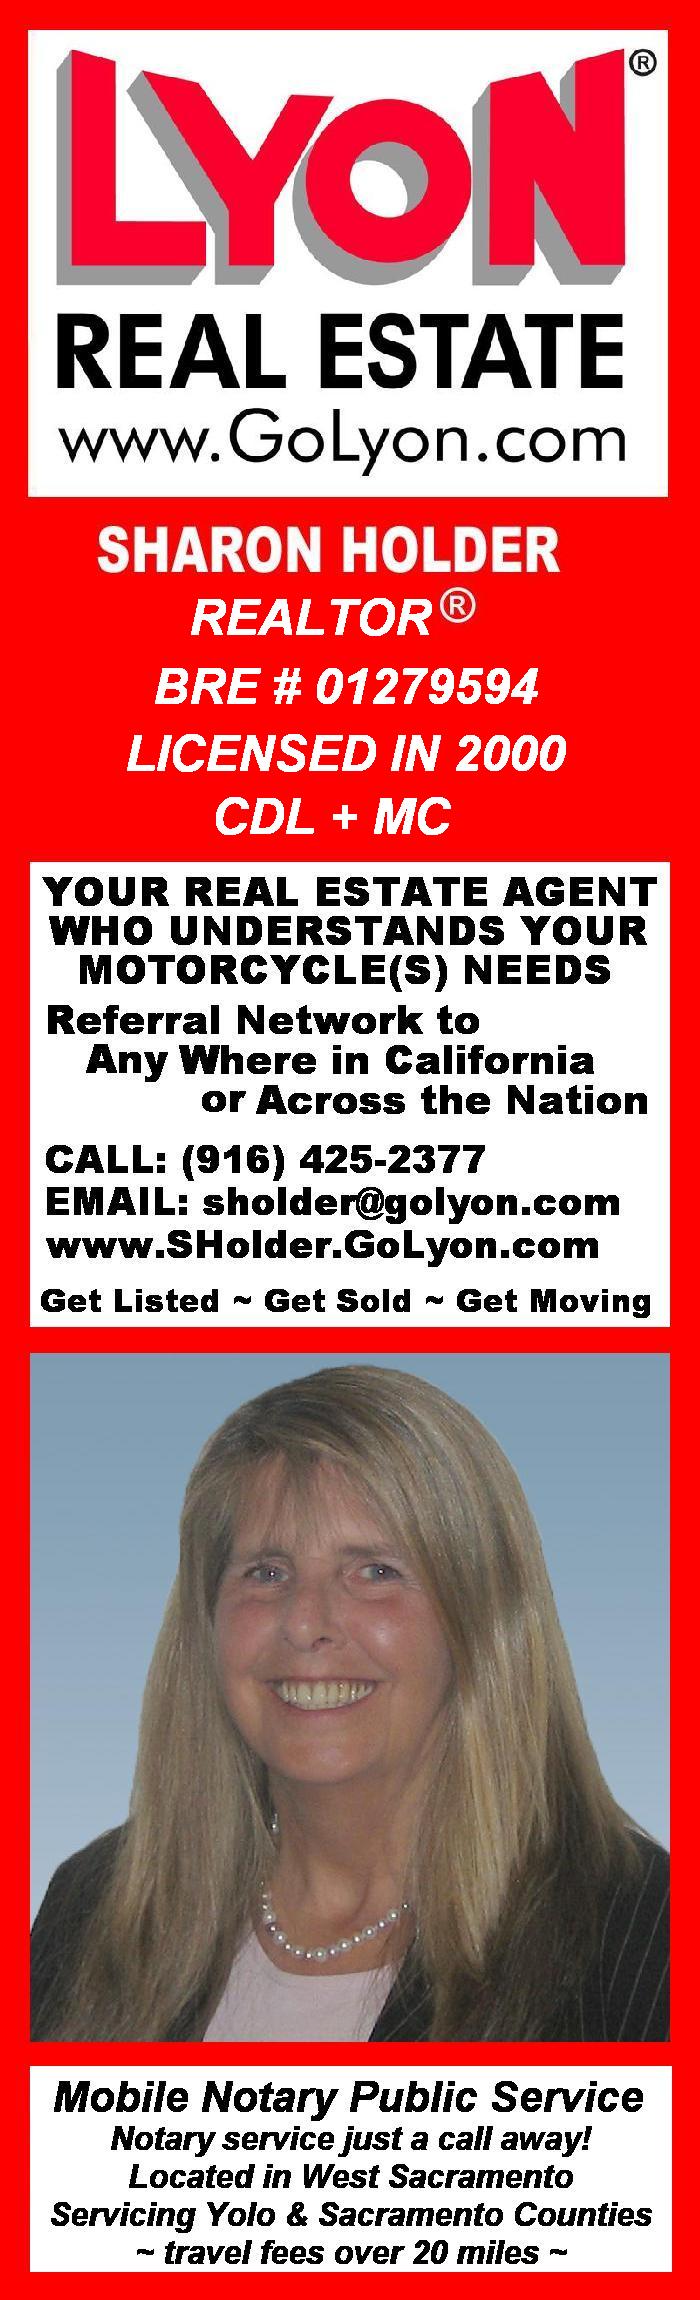 Sharon Holder, Mobile Notary Public Service, West Sacramento, Yolo and Sacramento counties